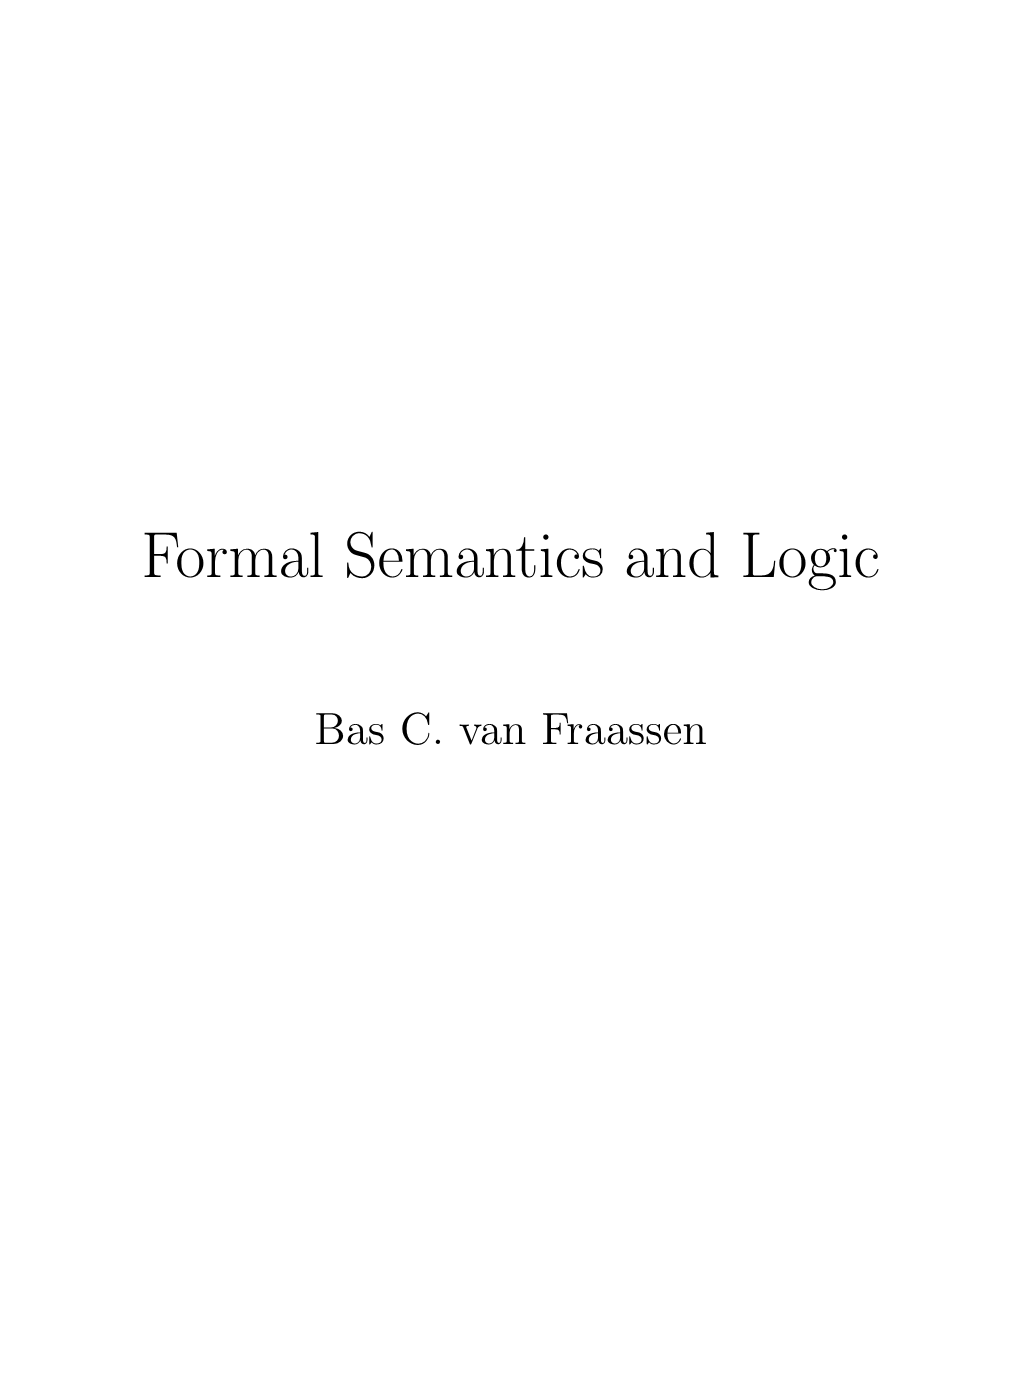 Formal Semantics and Logic.Pdf